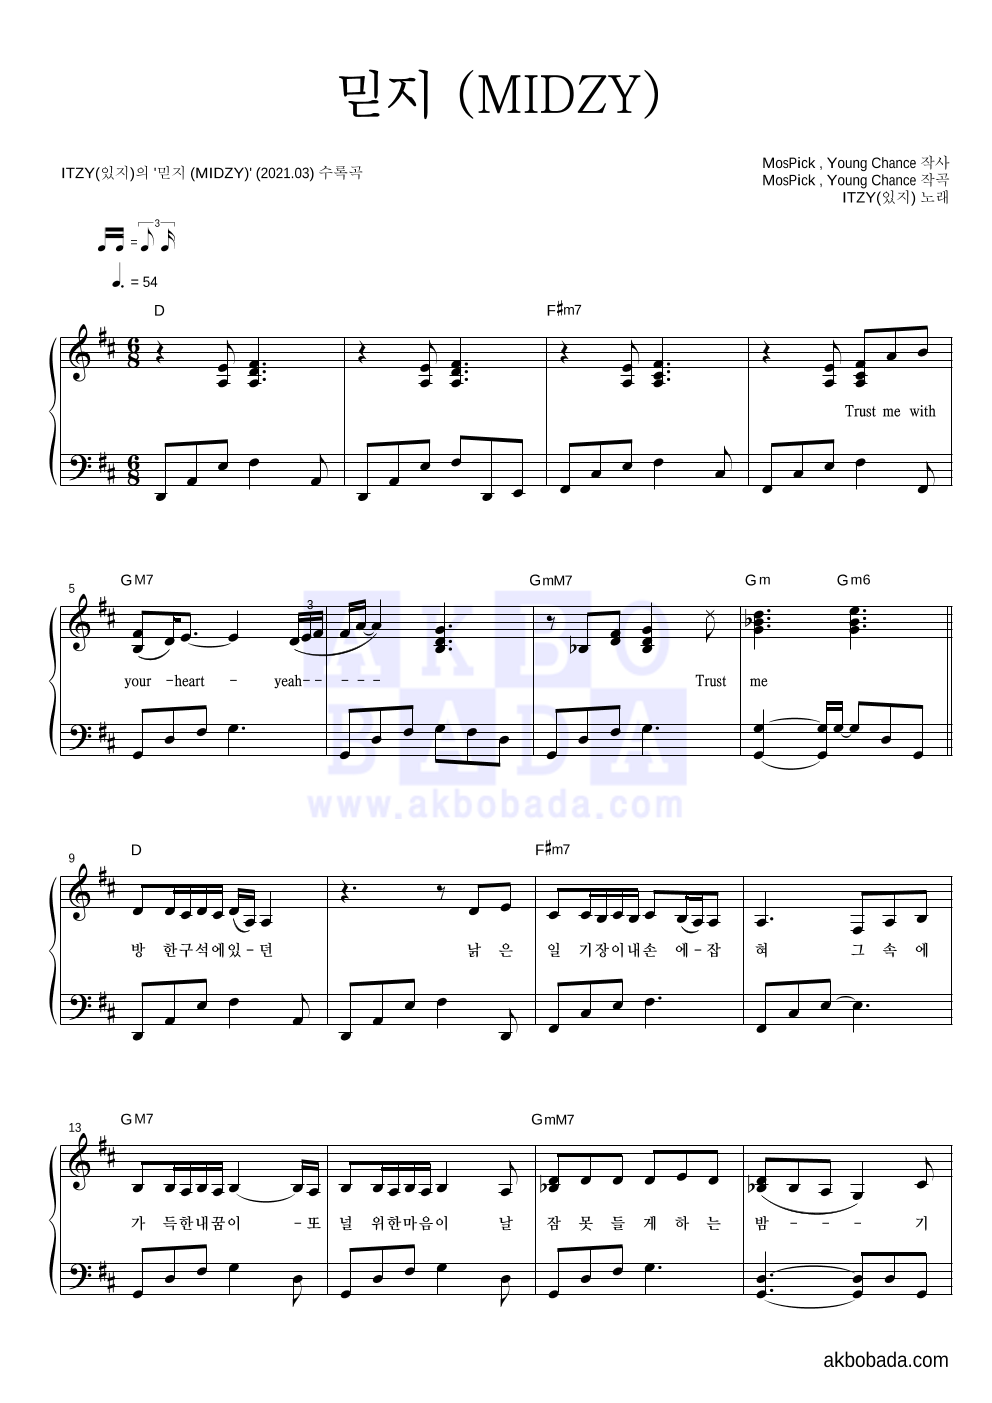 ITZY(있지) - 믿지 (MIDZY) 피아노 2단 악보 